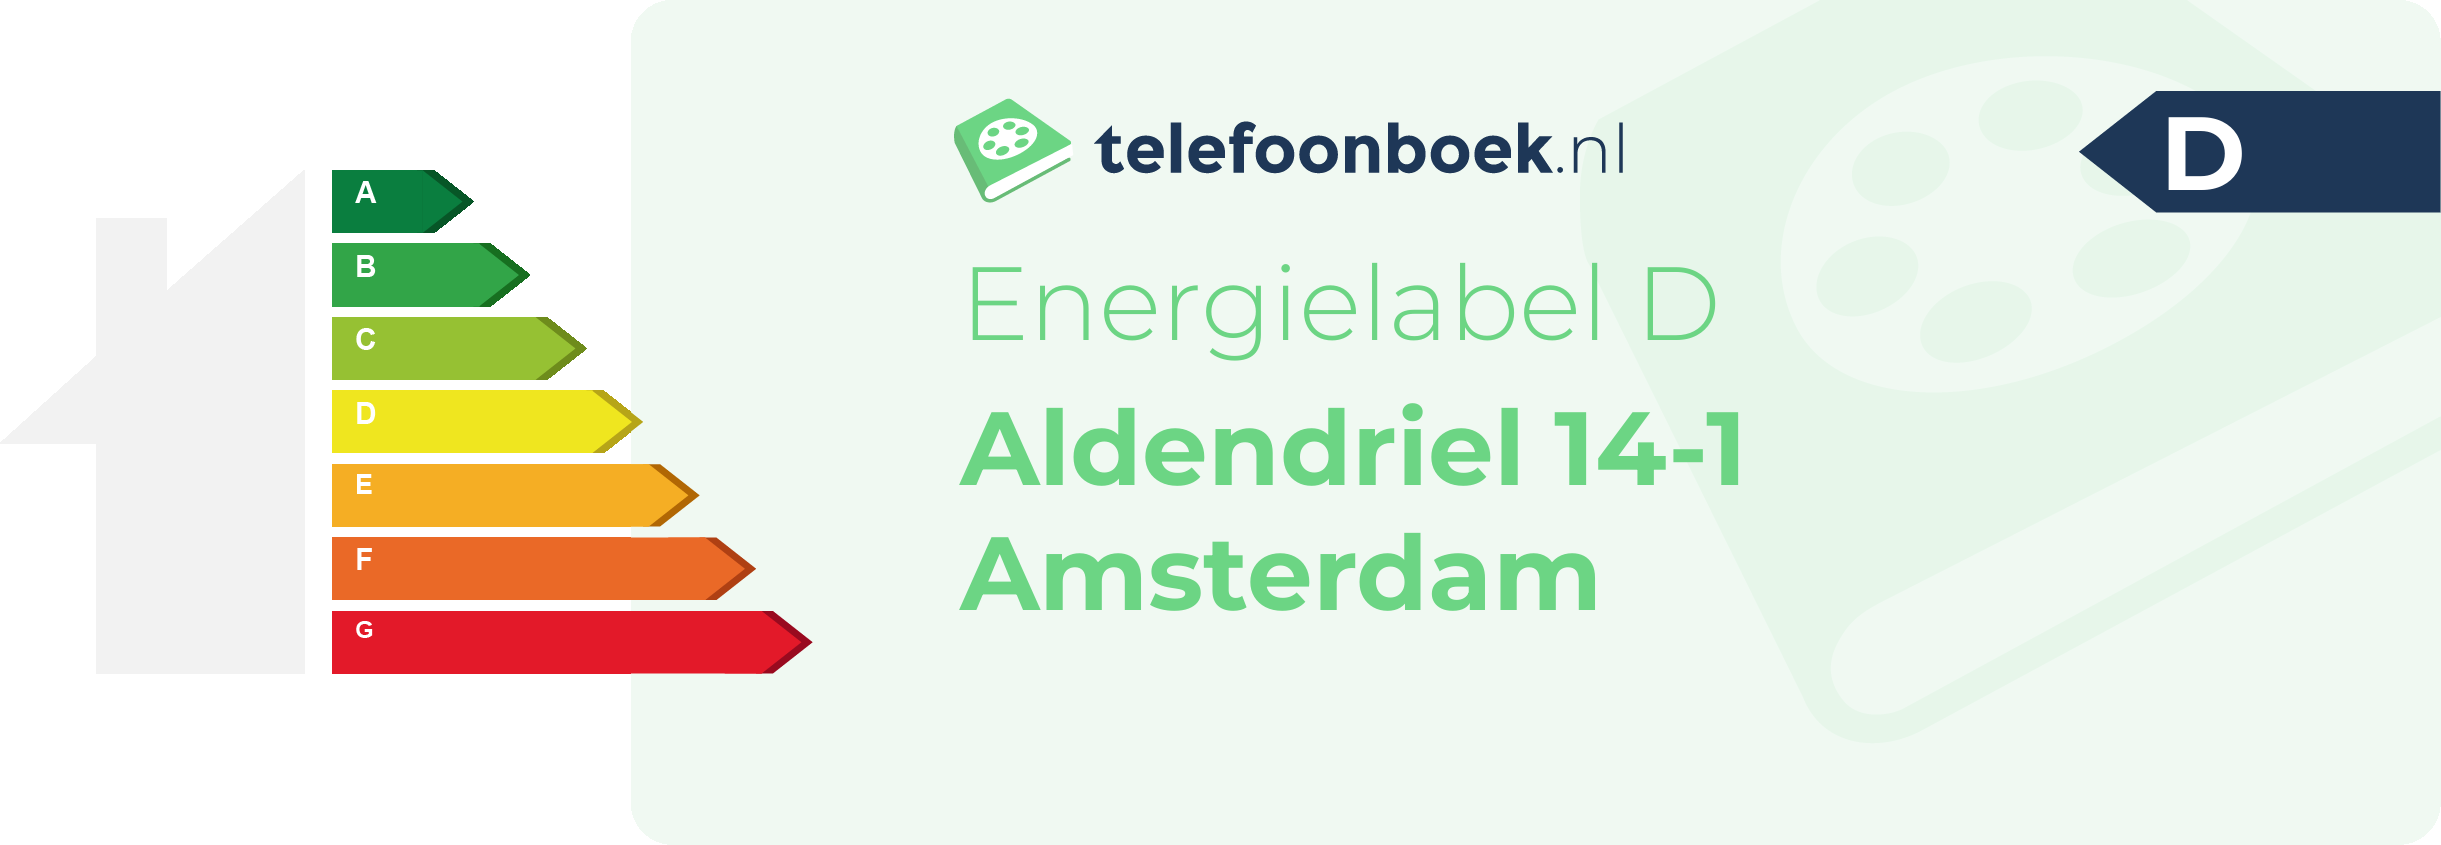 Energielabel Aldendriel 14-1 Amsterdam